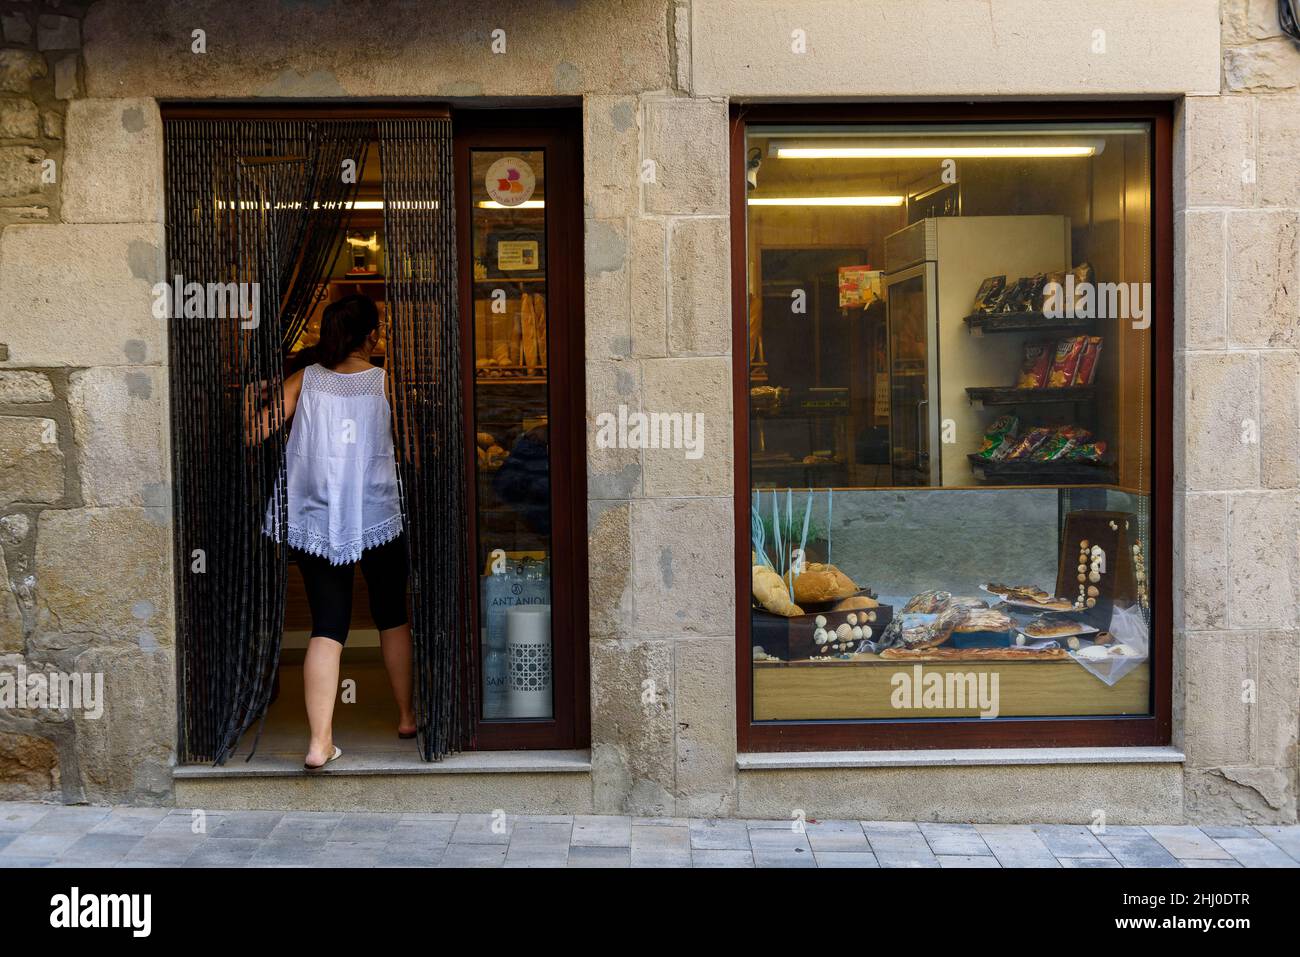 Una donna che entra in una panetteria nella città di Prats de Lluanès (Osona, Barcellona, Catalogna, Spagna) ESP: Una mujer entrando en una panadería de un pueblo Foto Stock